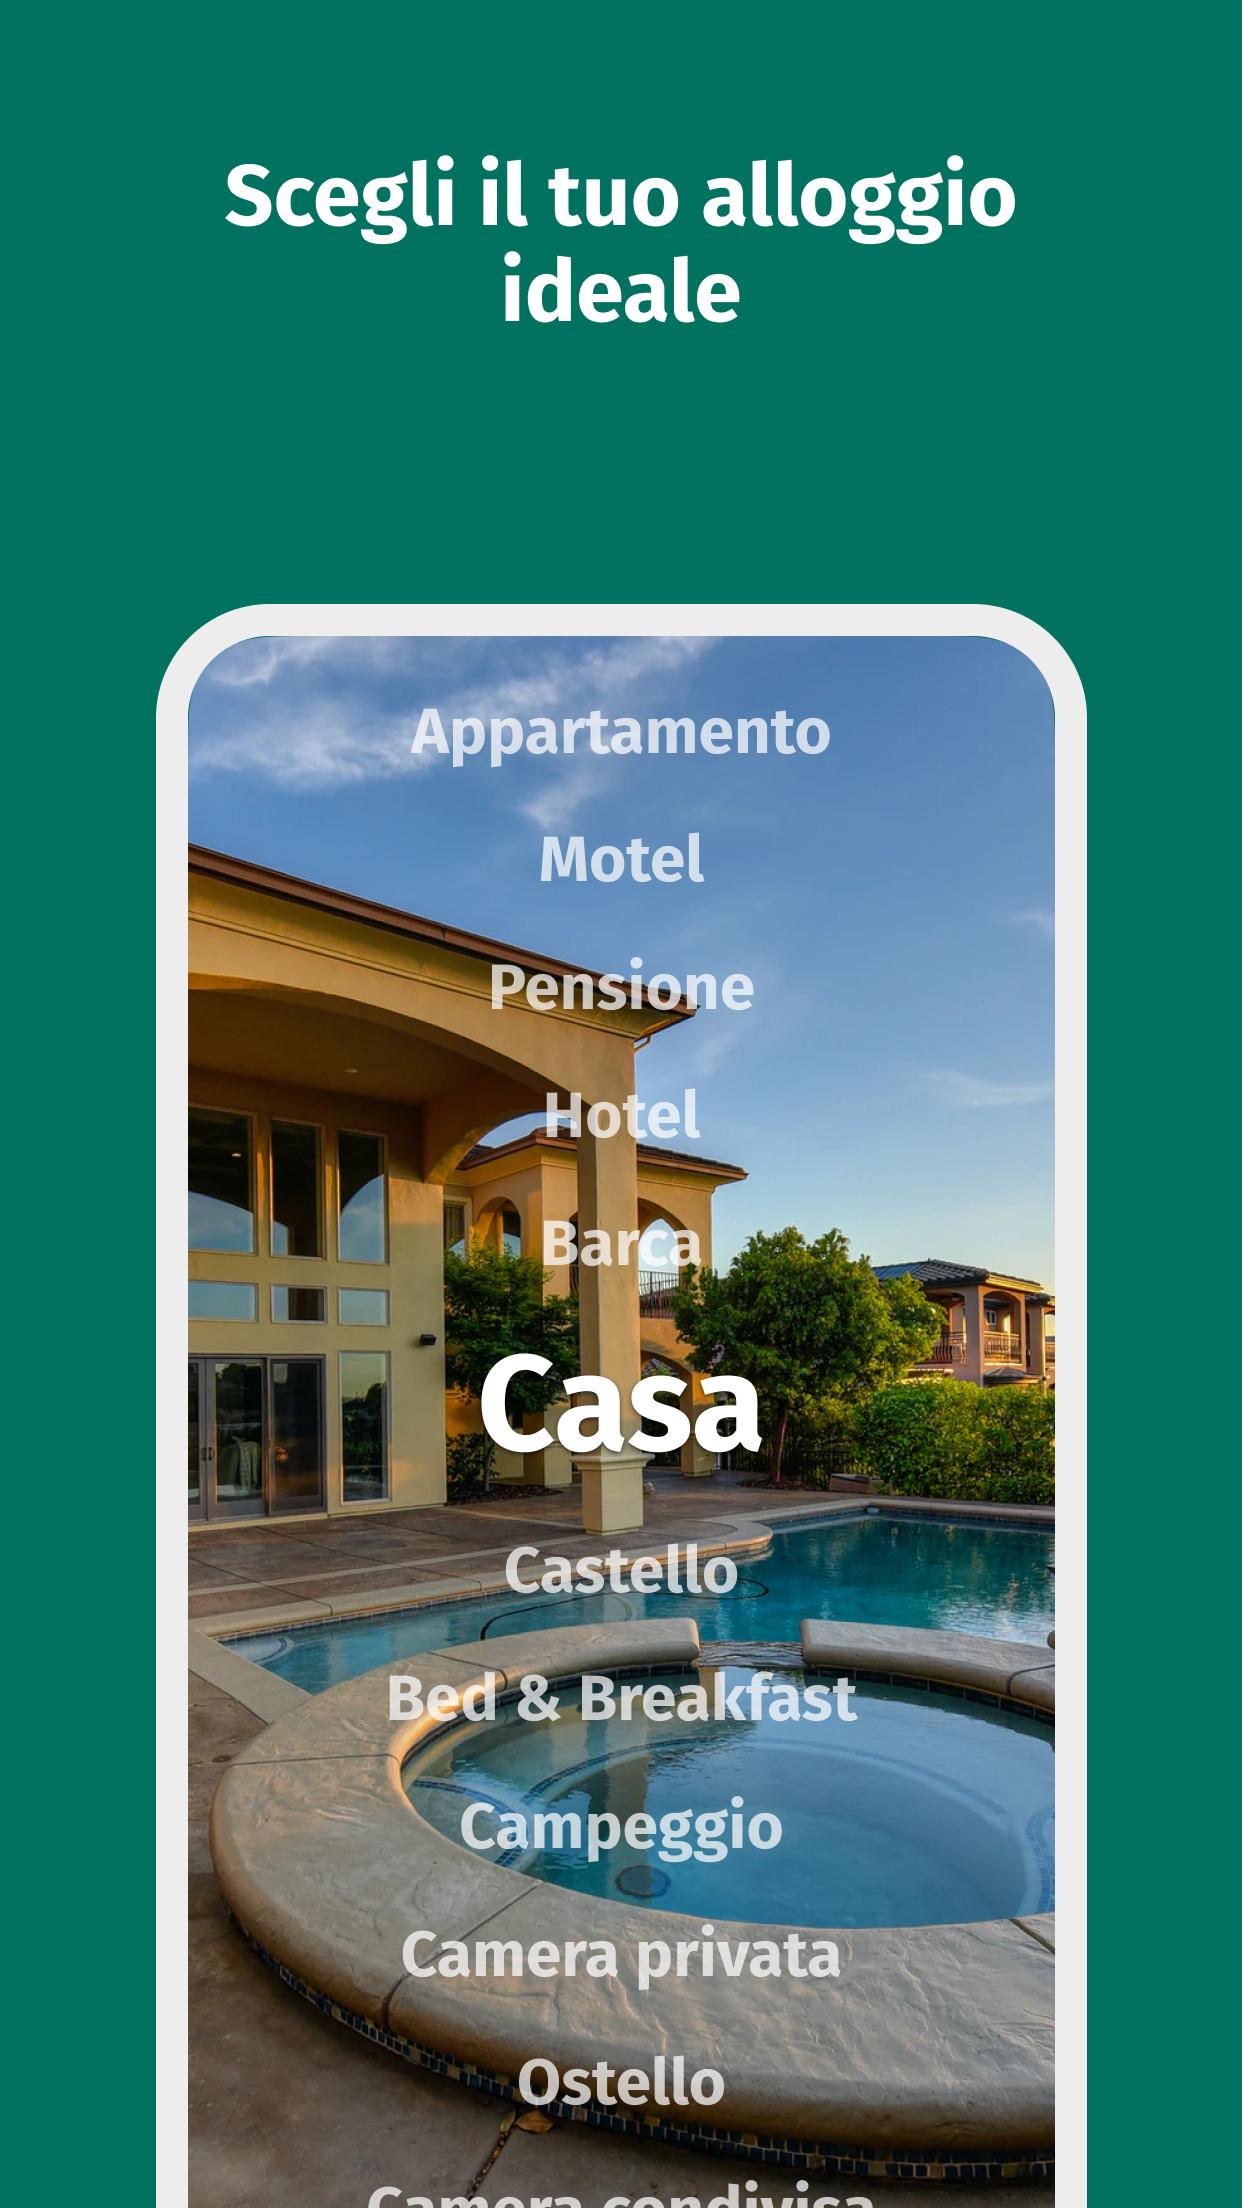 CaseVacanza.it Cerca case vacanza in affitto 1.2.0 Screenshot 10